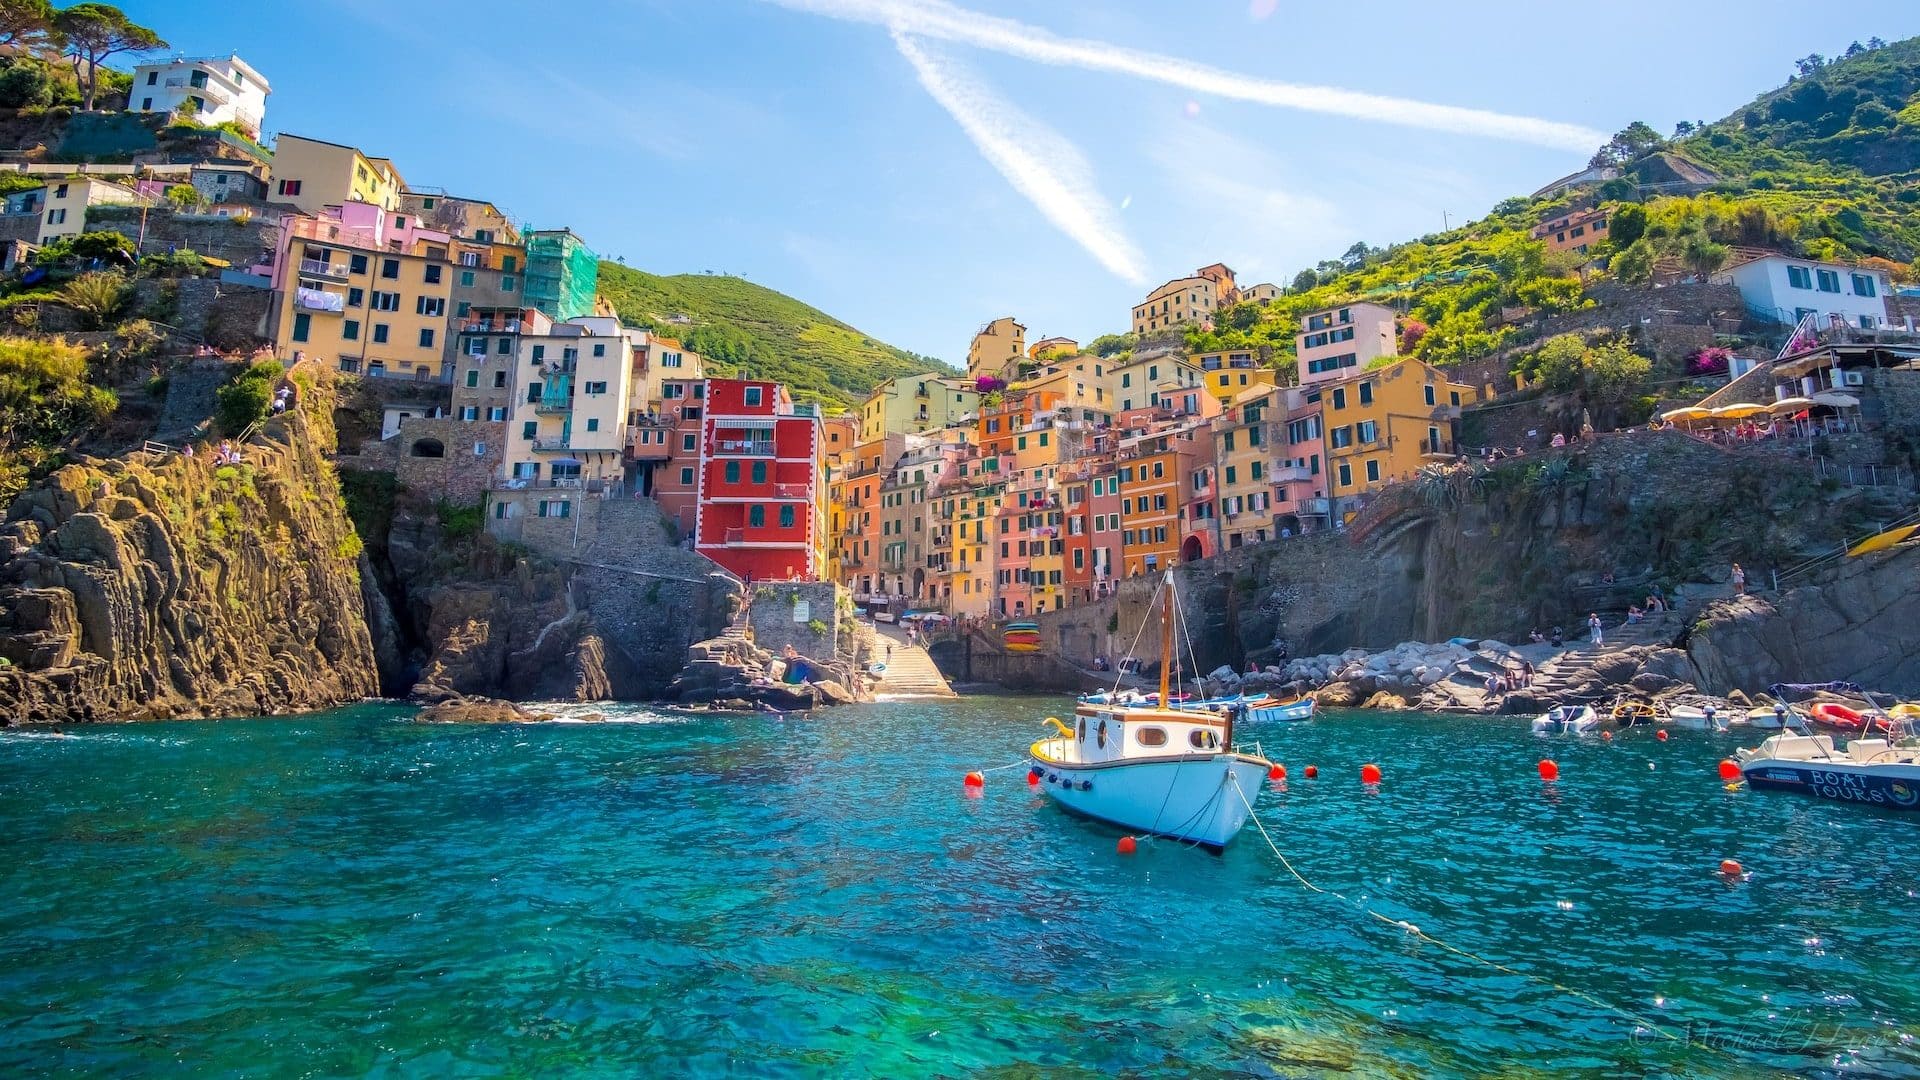 Cinque Terre: The most exclusive destinations in Italy